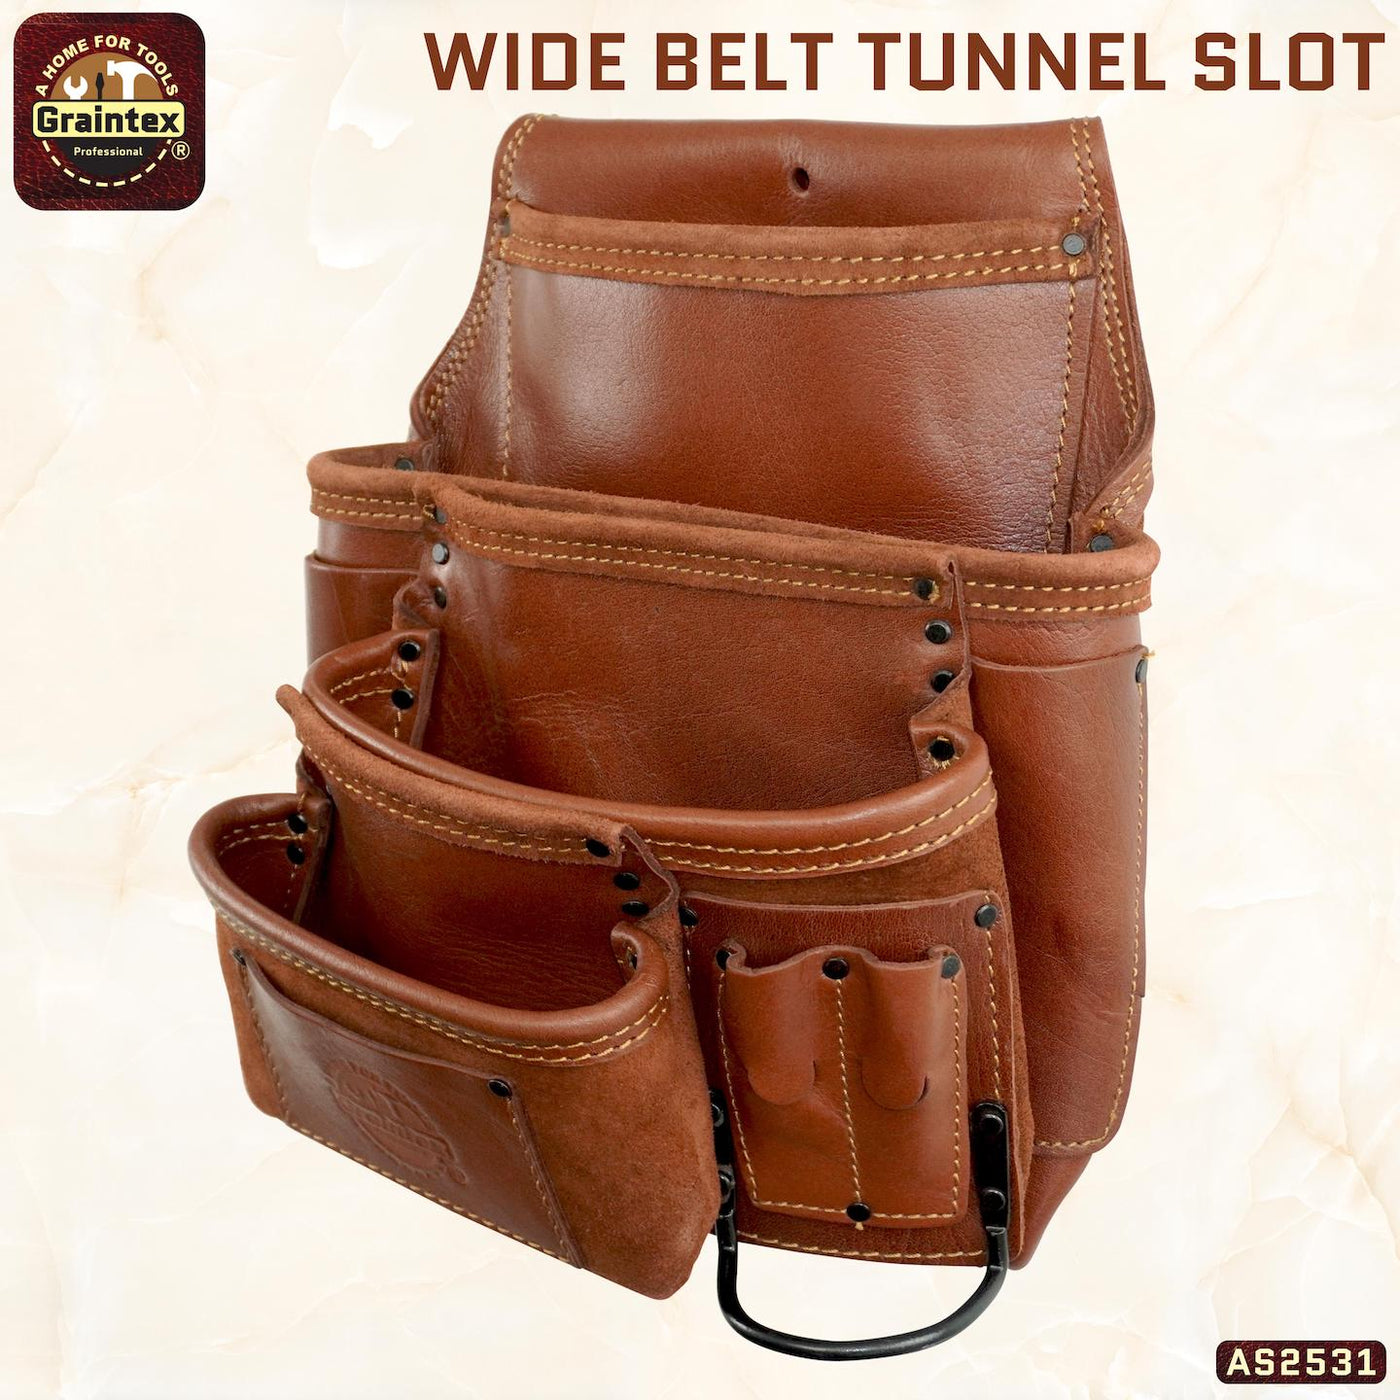 AS2531 :: 10 Pocket Left Handed Framer’s Tool Pouch Ambassador Series Chestnut Brown Color Top Grain Leather